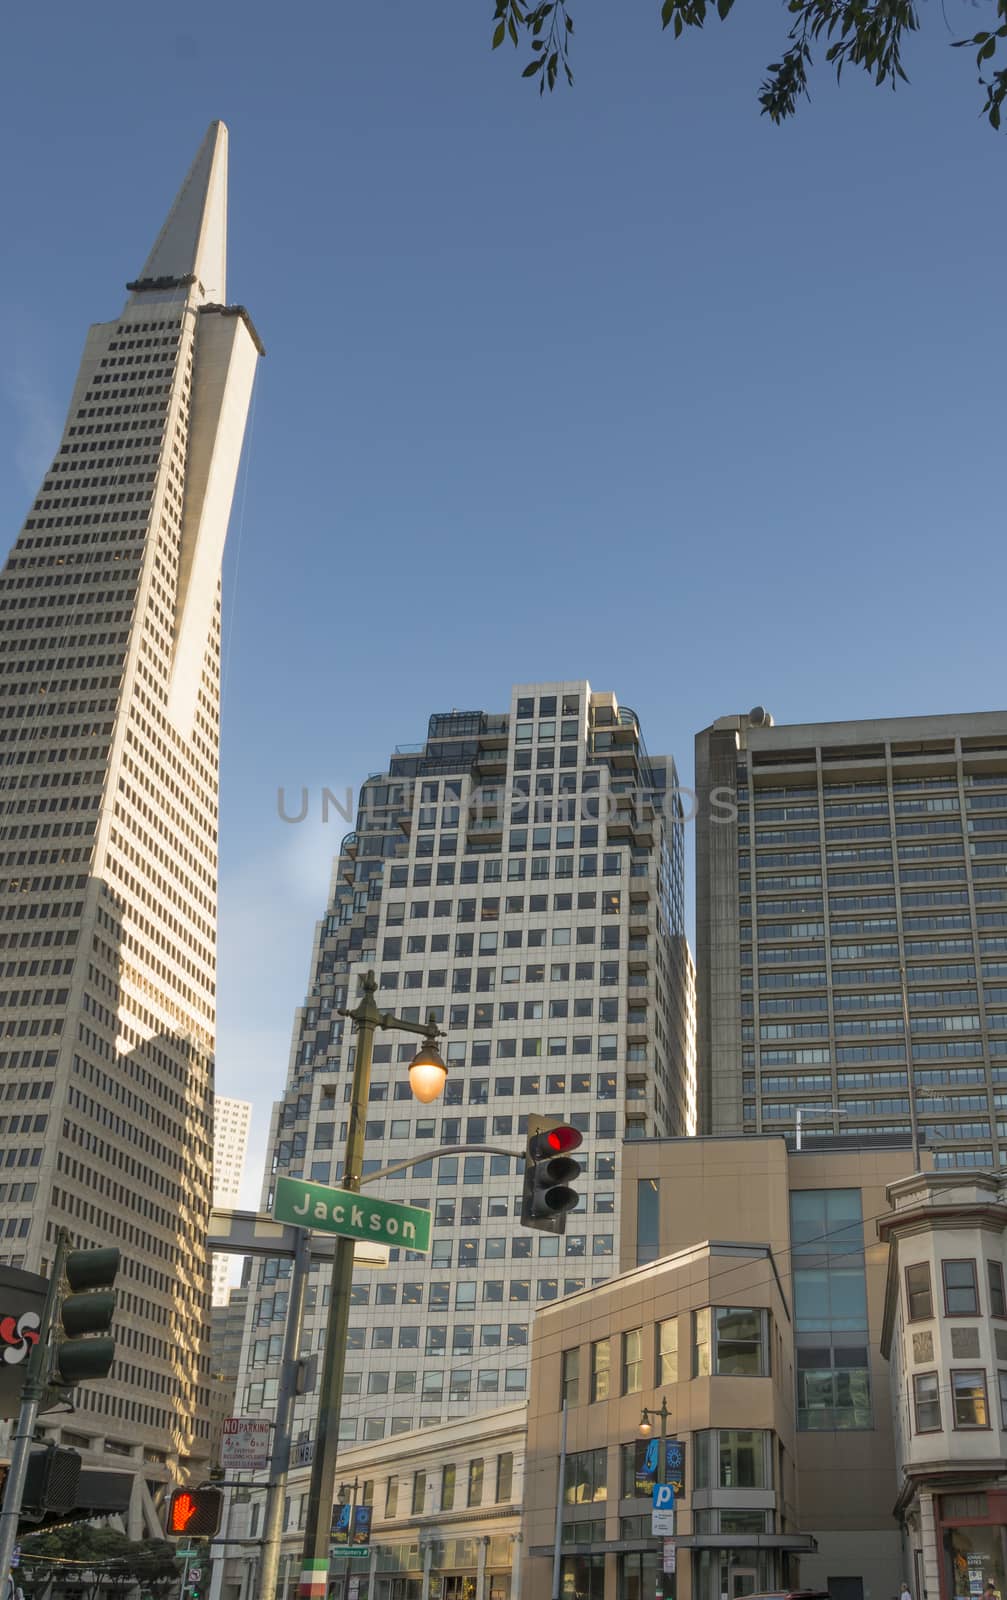 San Francisco, CA, USA, october 23, 2016: Urban view of San Francisco with Jackson street and the transamerica pyramid